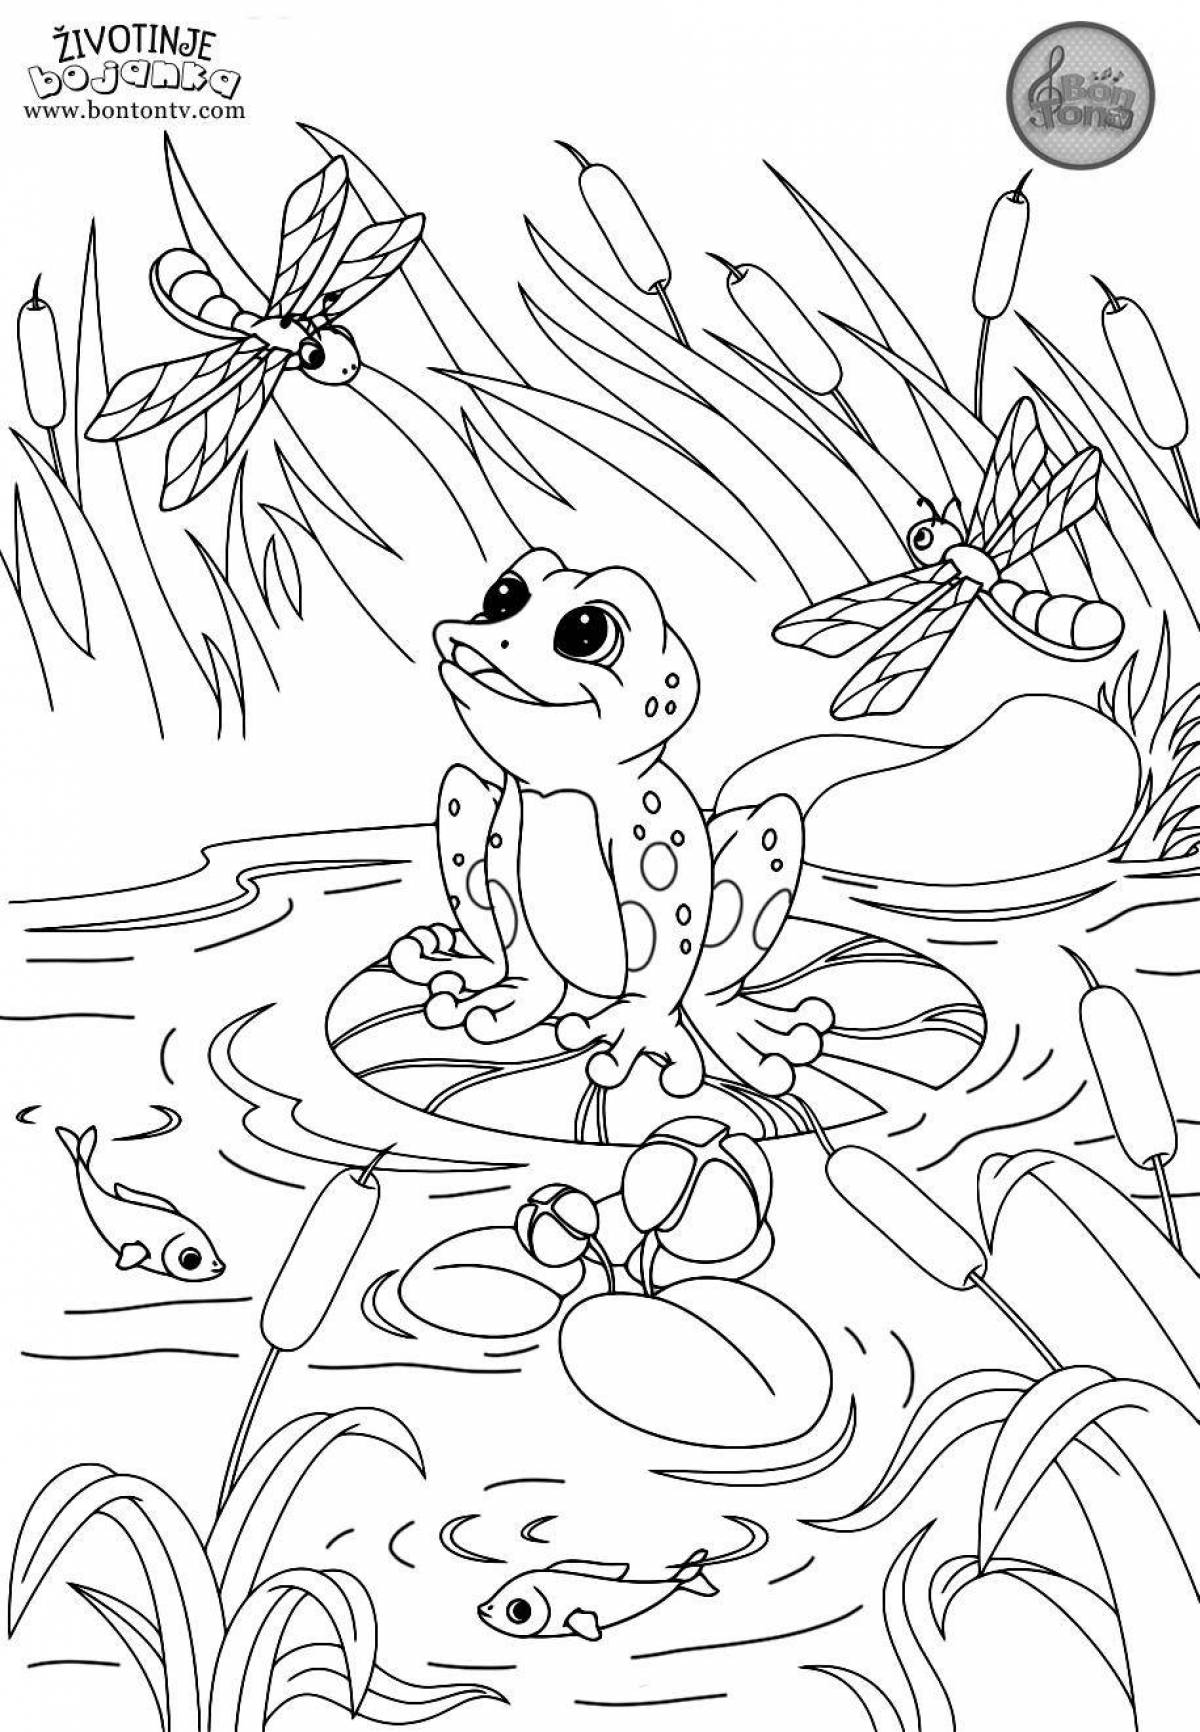 Fun coloring frog traveler for kids